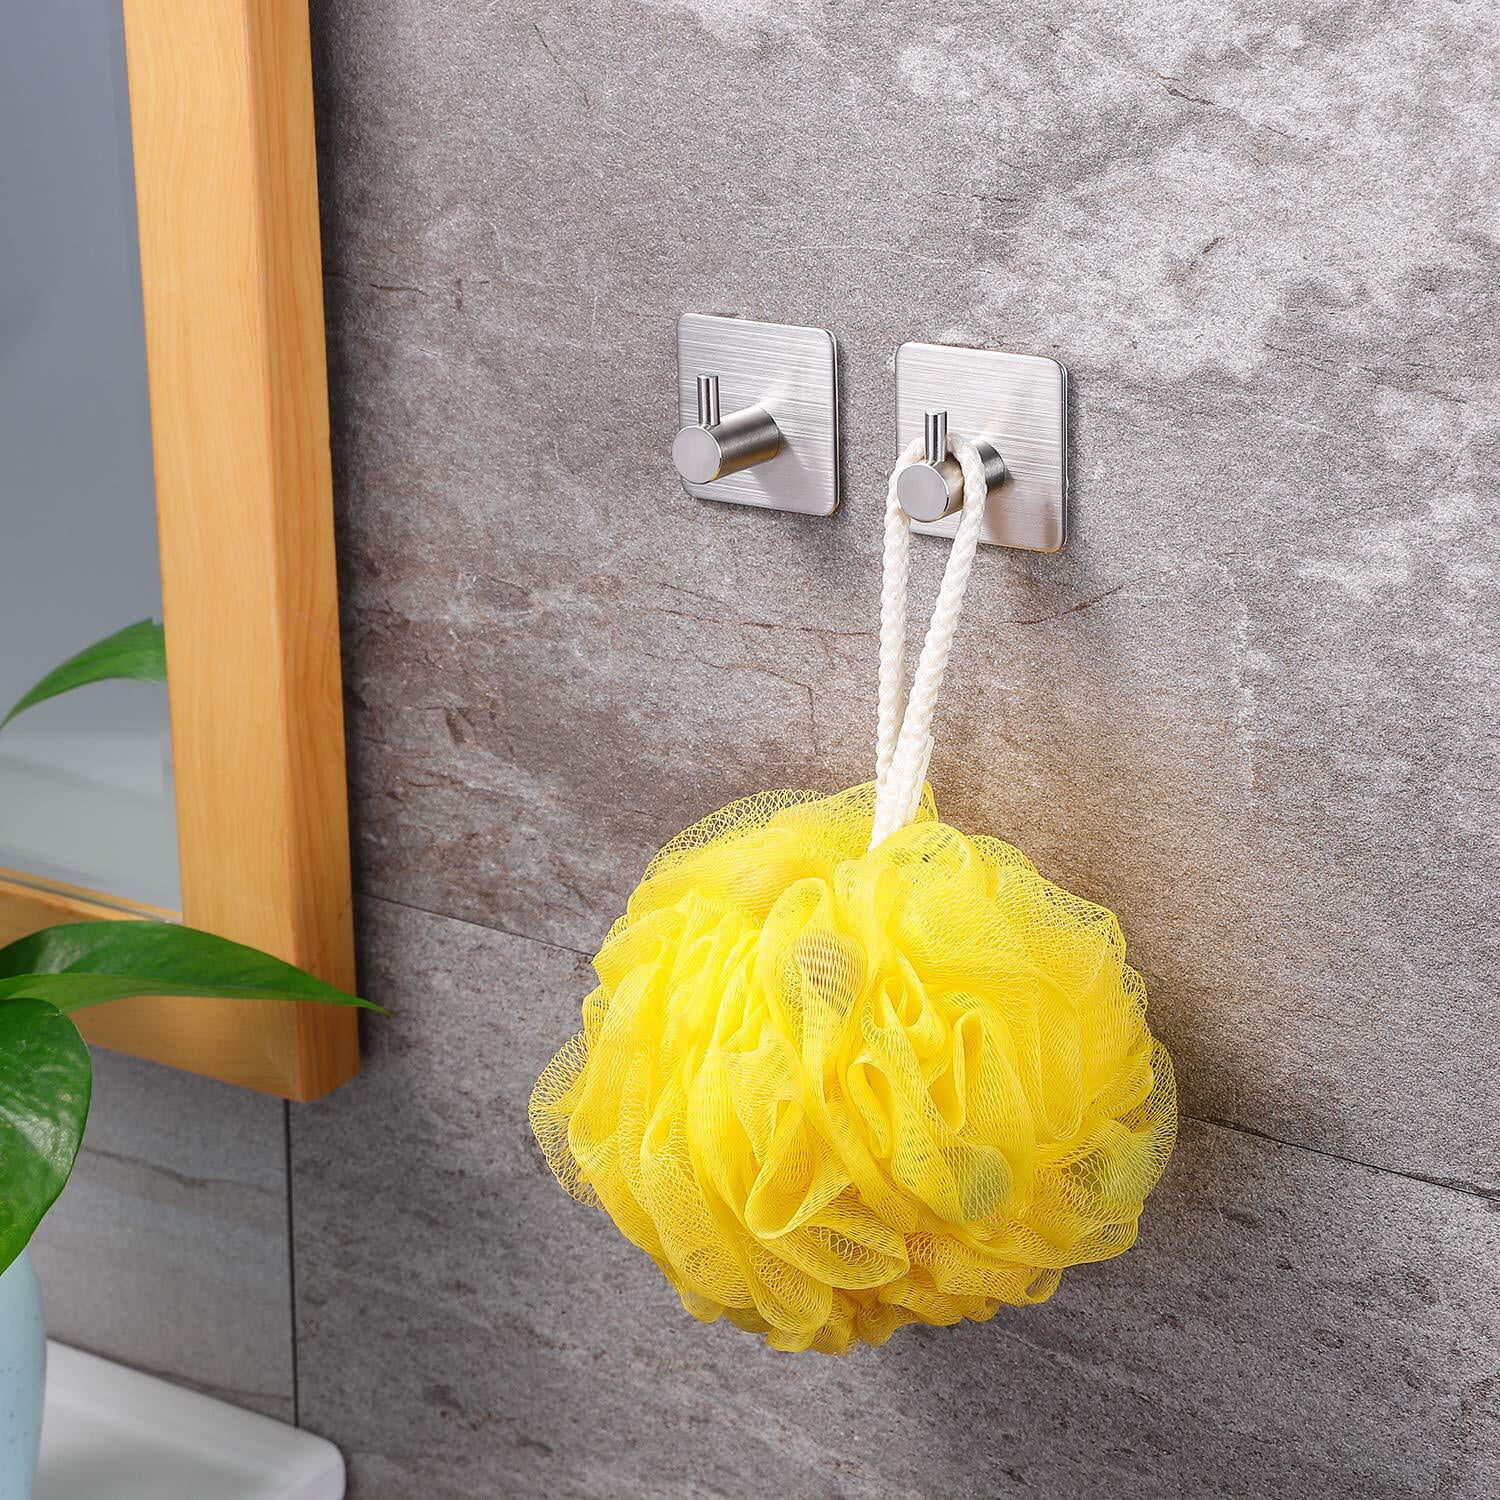 YIGII 16-Inch Towel Bar - Self Adhesive Bathroom Towel Holder with